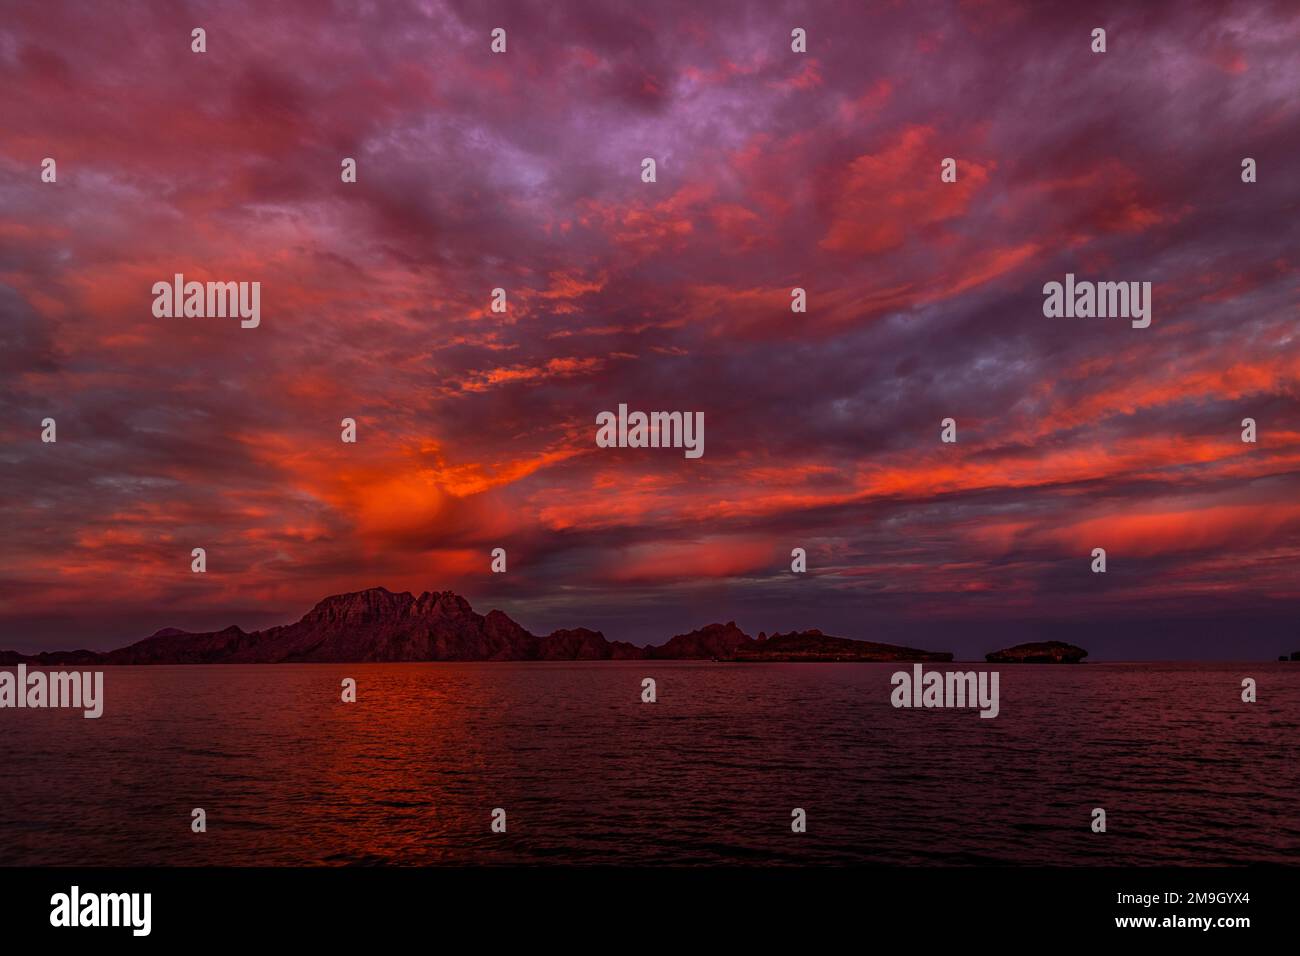 Danzante Island and Gulf of California at sunset, Baja California Sur, Mexico Stock Photo